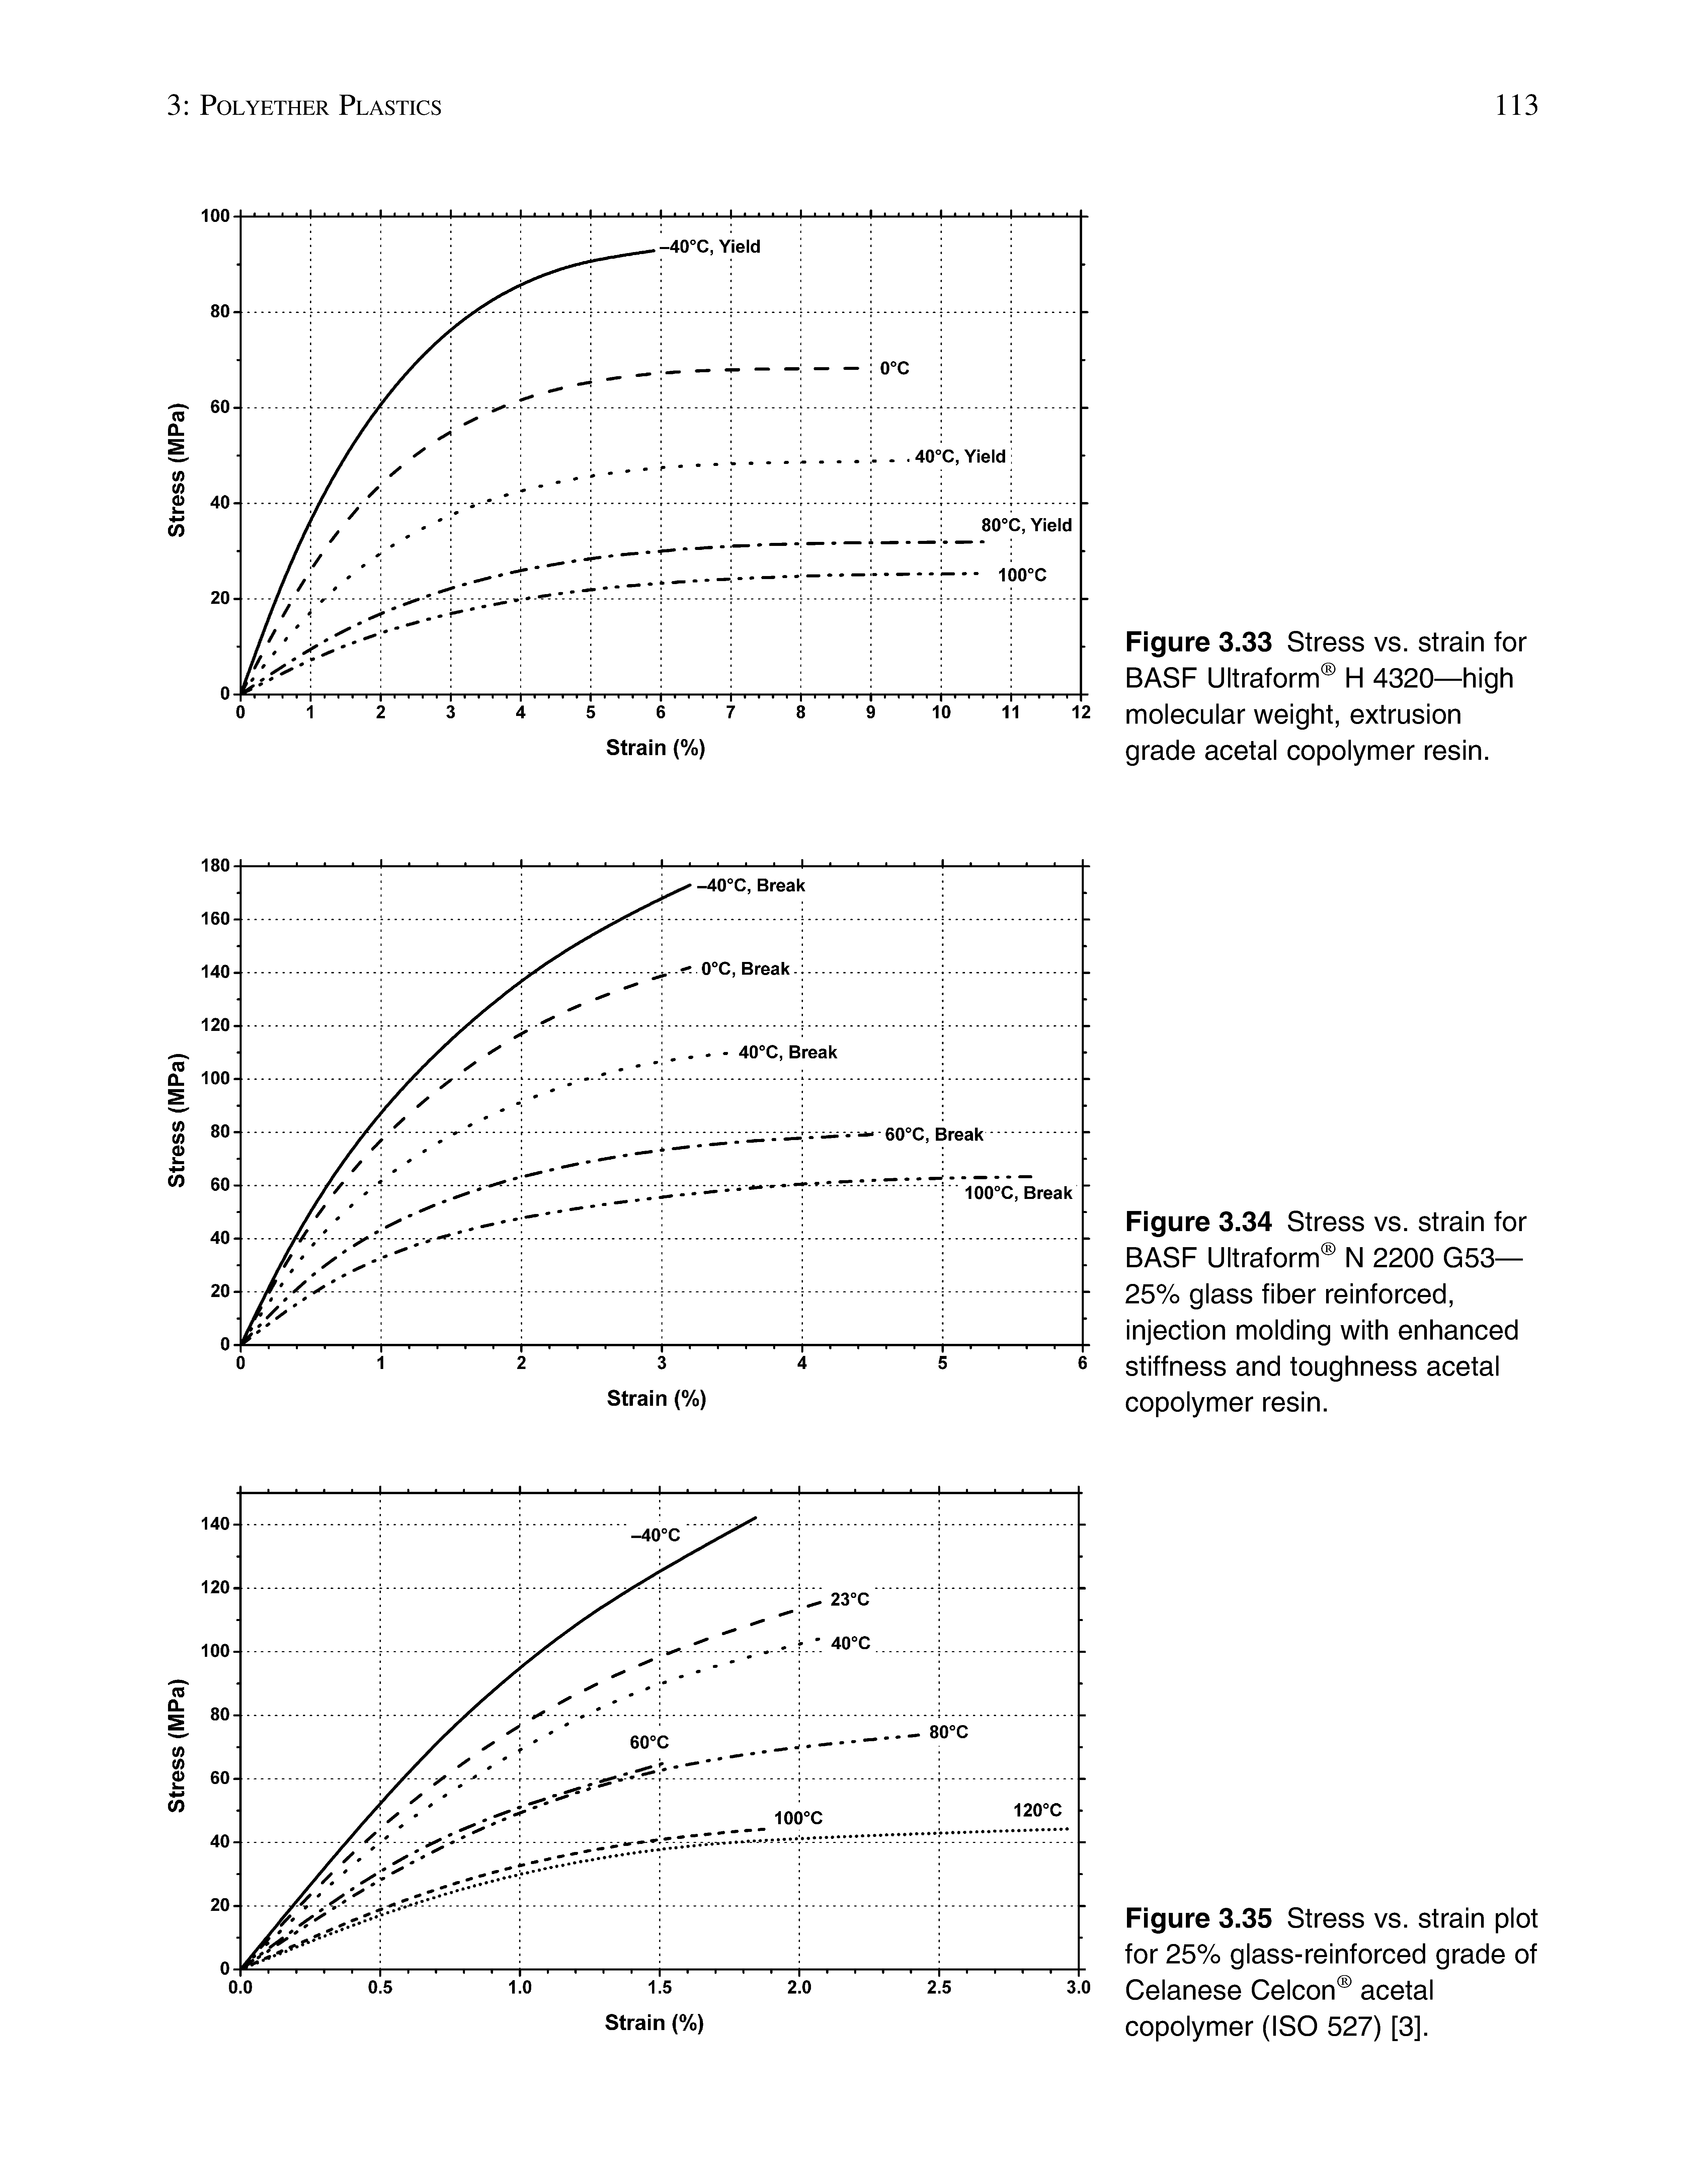 Figure 3.35 Stress vs. strain plot for 25% glass-reinforced grade of Celanese Celcon acetal copolymer (ISO 527) [3].